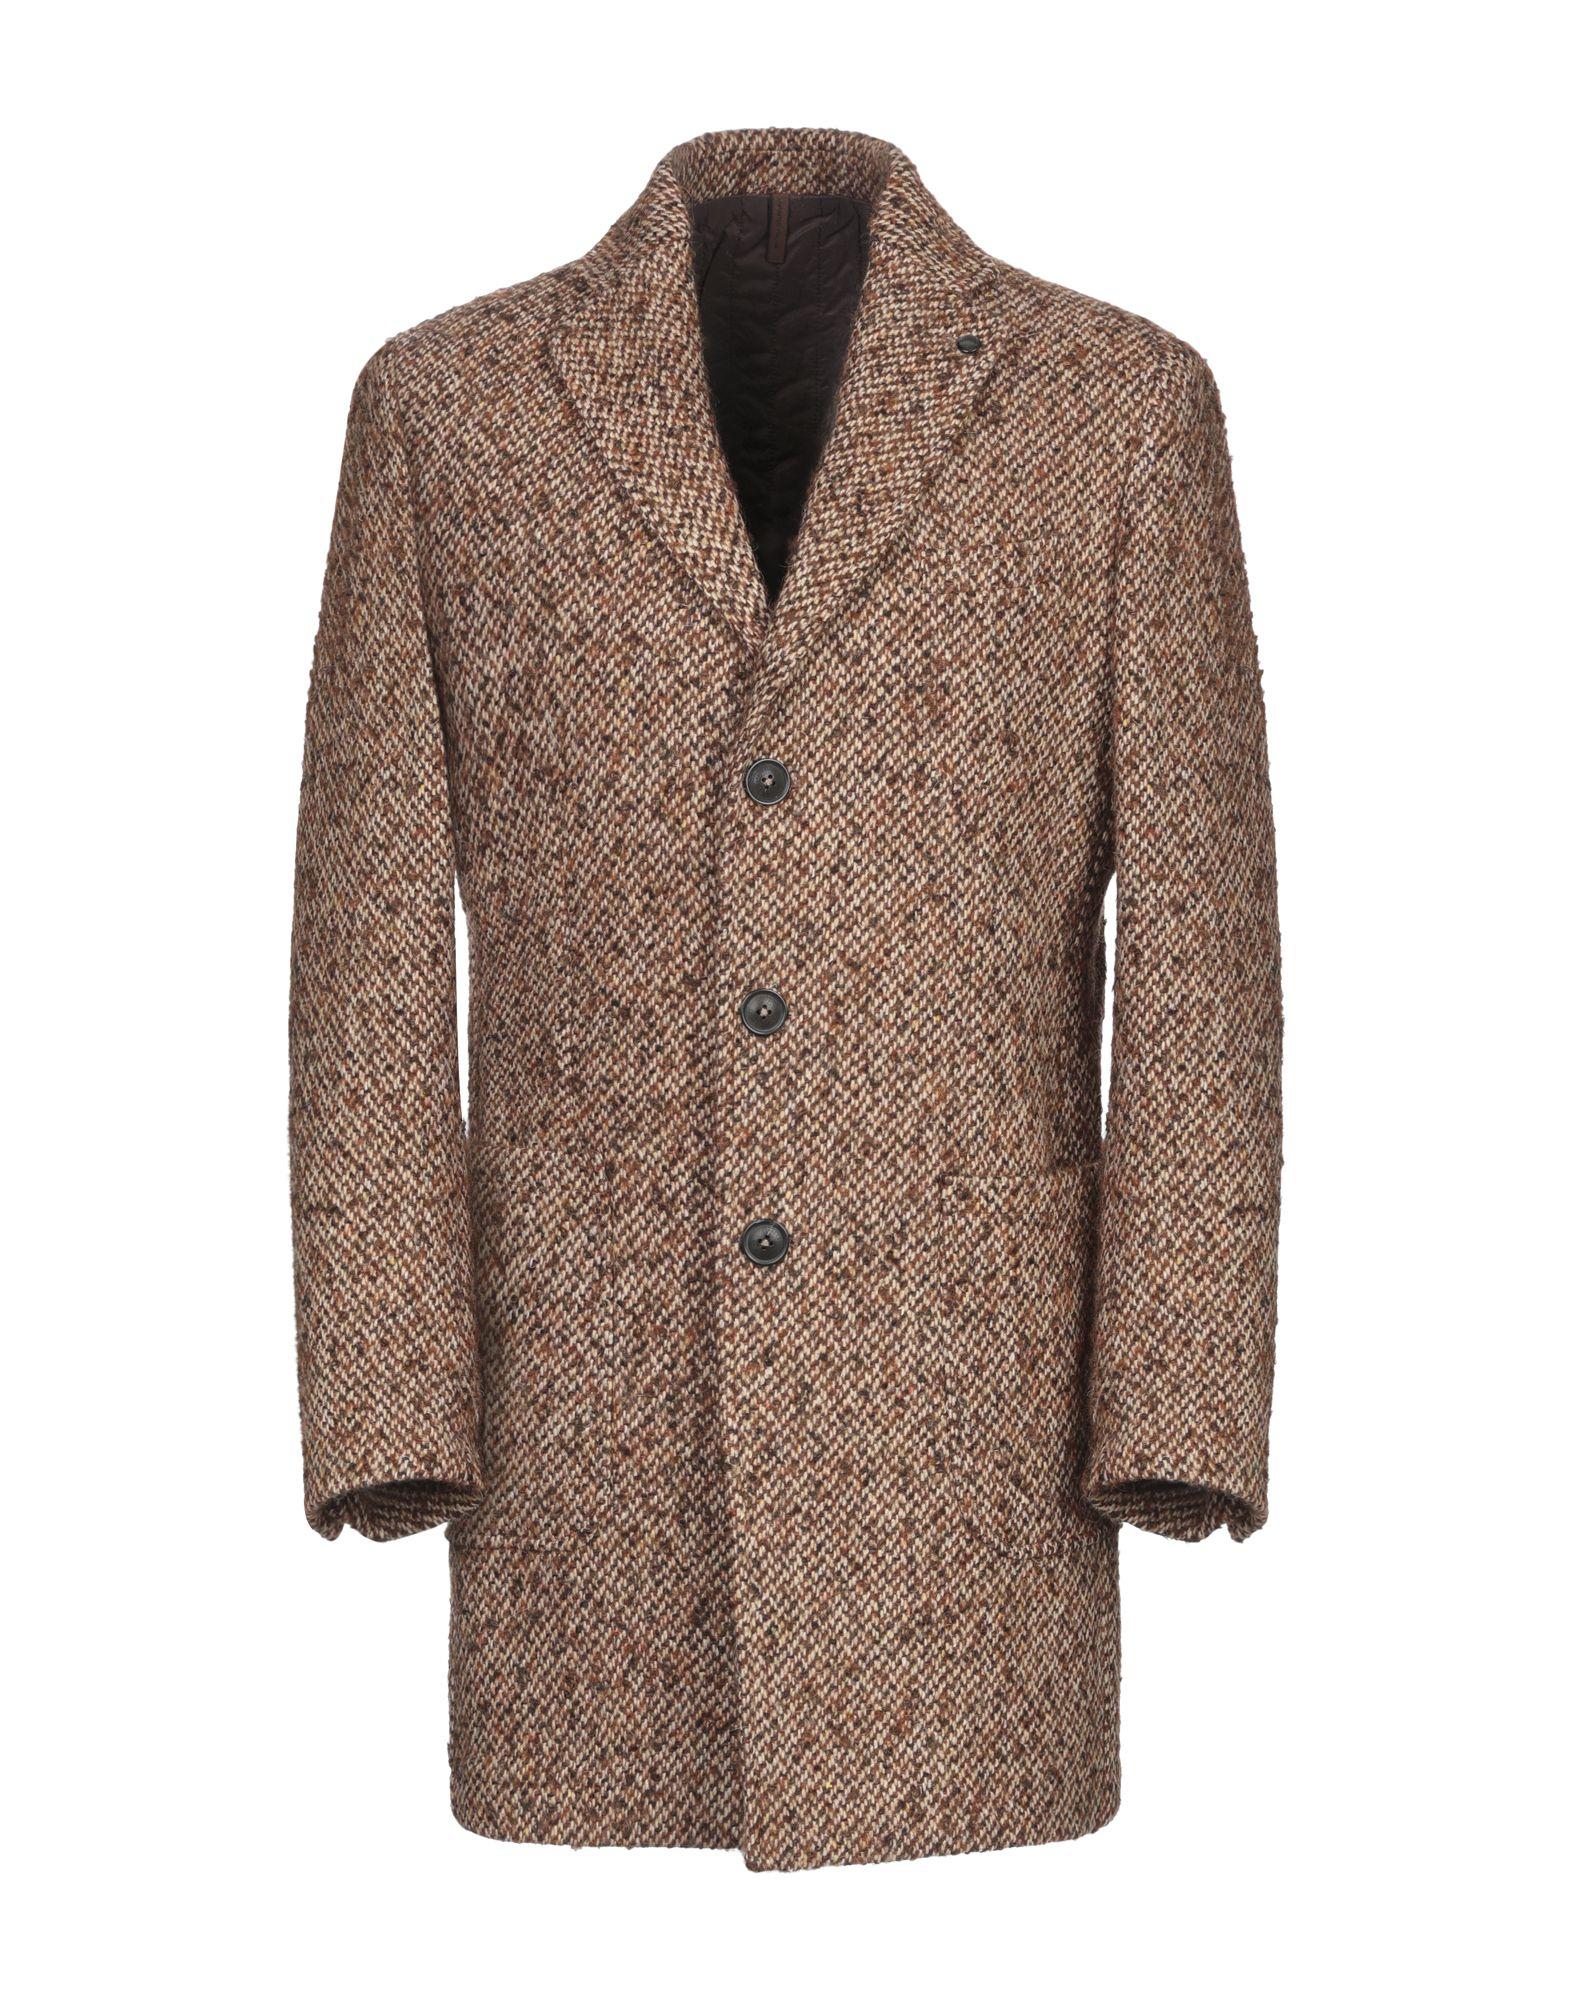 Laboratori Italiani Tweed Coat in Brown for Men - Lyst